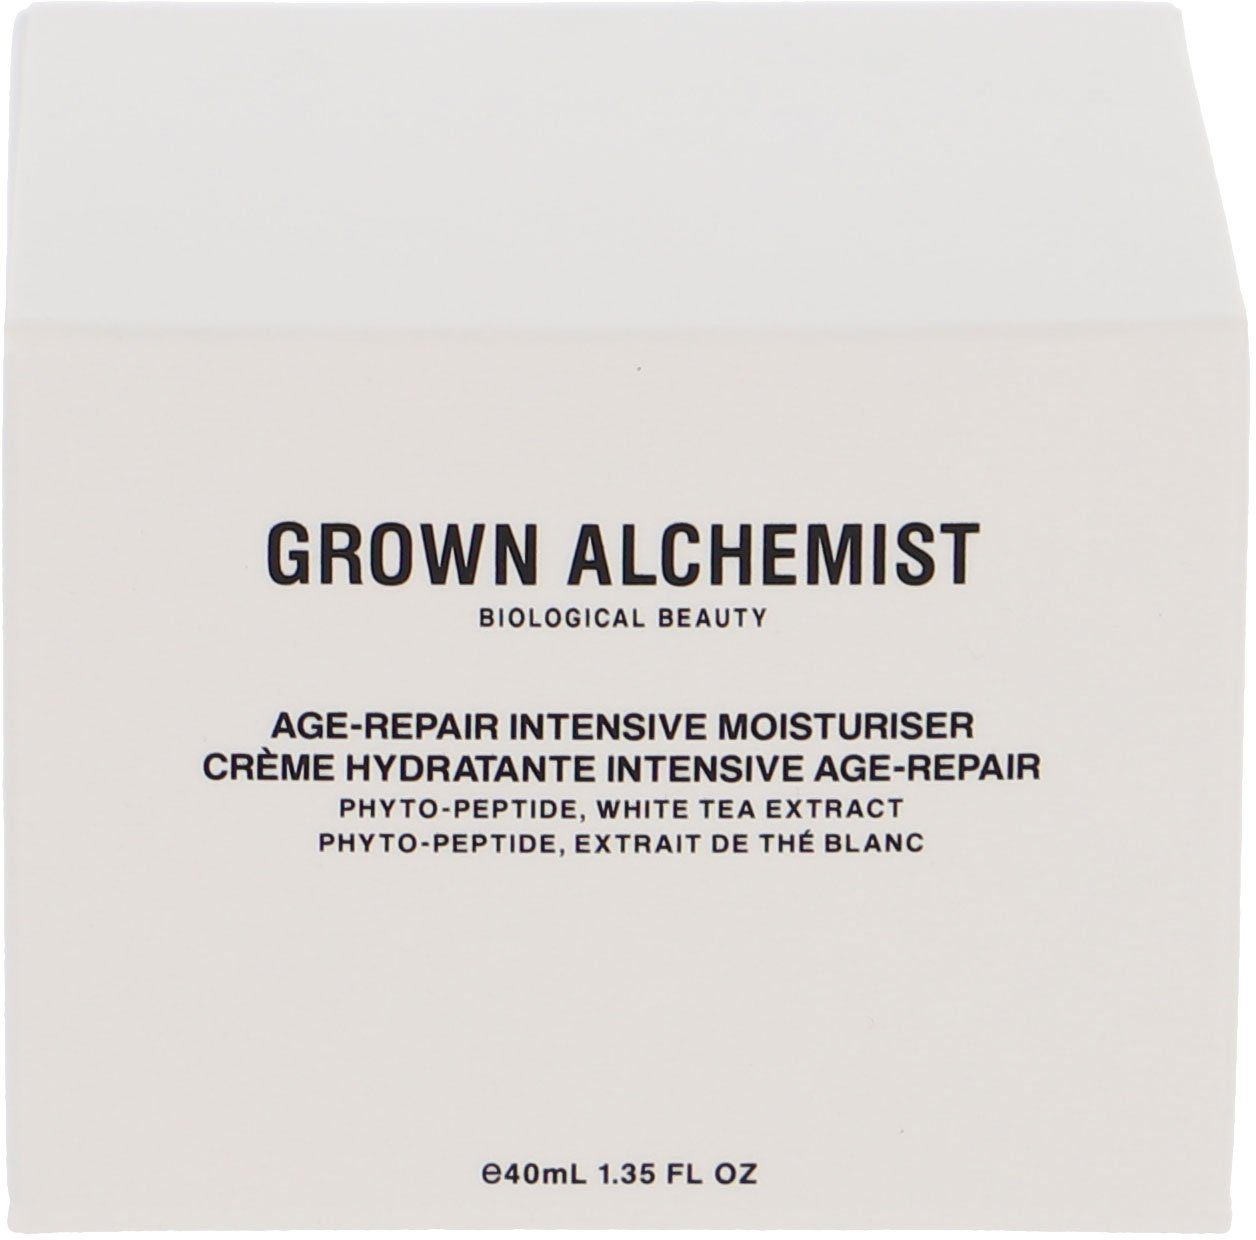 Phyto-Peptide GROWN Tea Intensive Extract, White Anti-Aging-Creme Moisturiser, Age-Repair ALCHEMIST